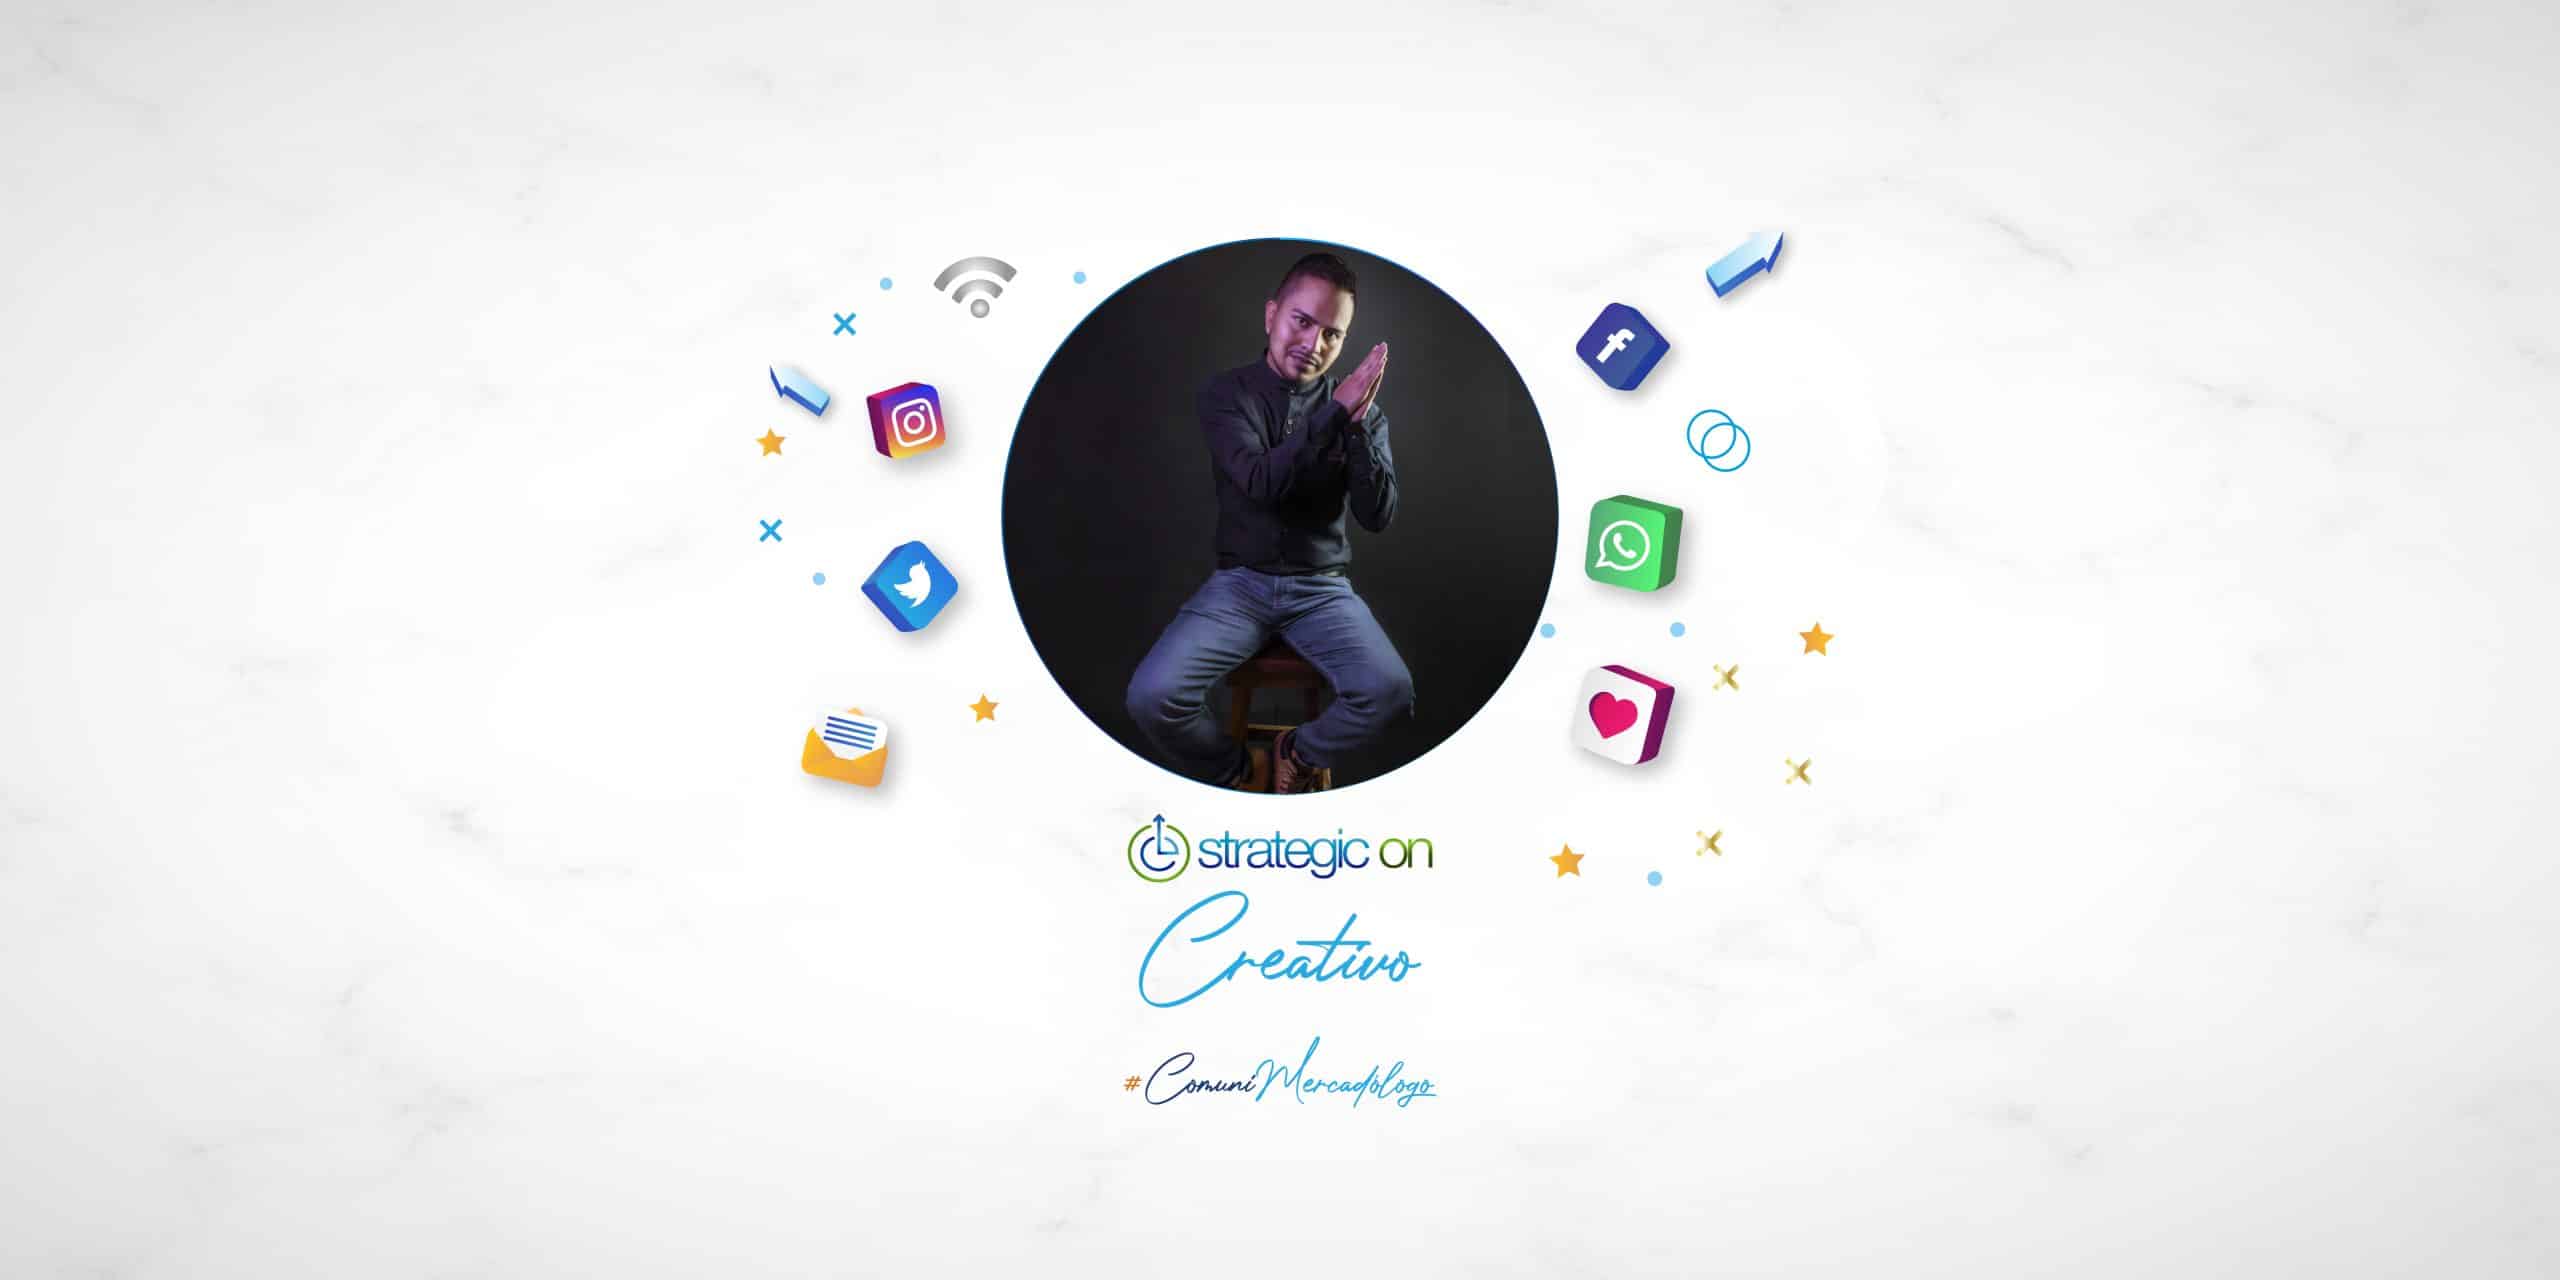 Leo-Farinango-CS-Comunicador-Marketing-Digital-Quito-Ecuador-Social-Media -